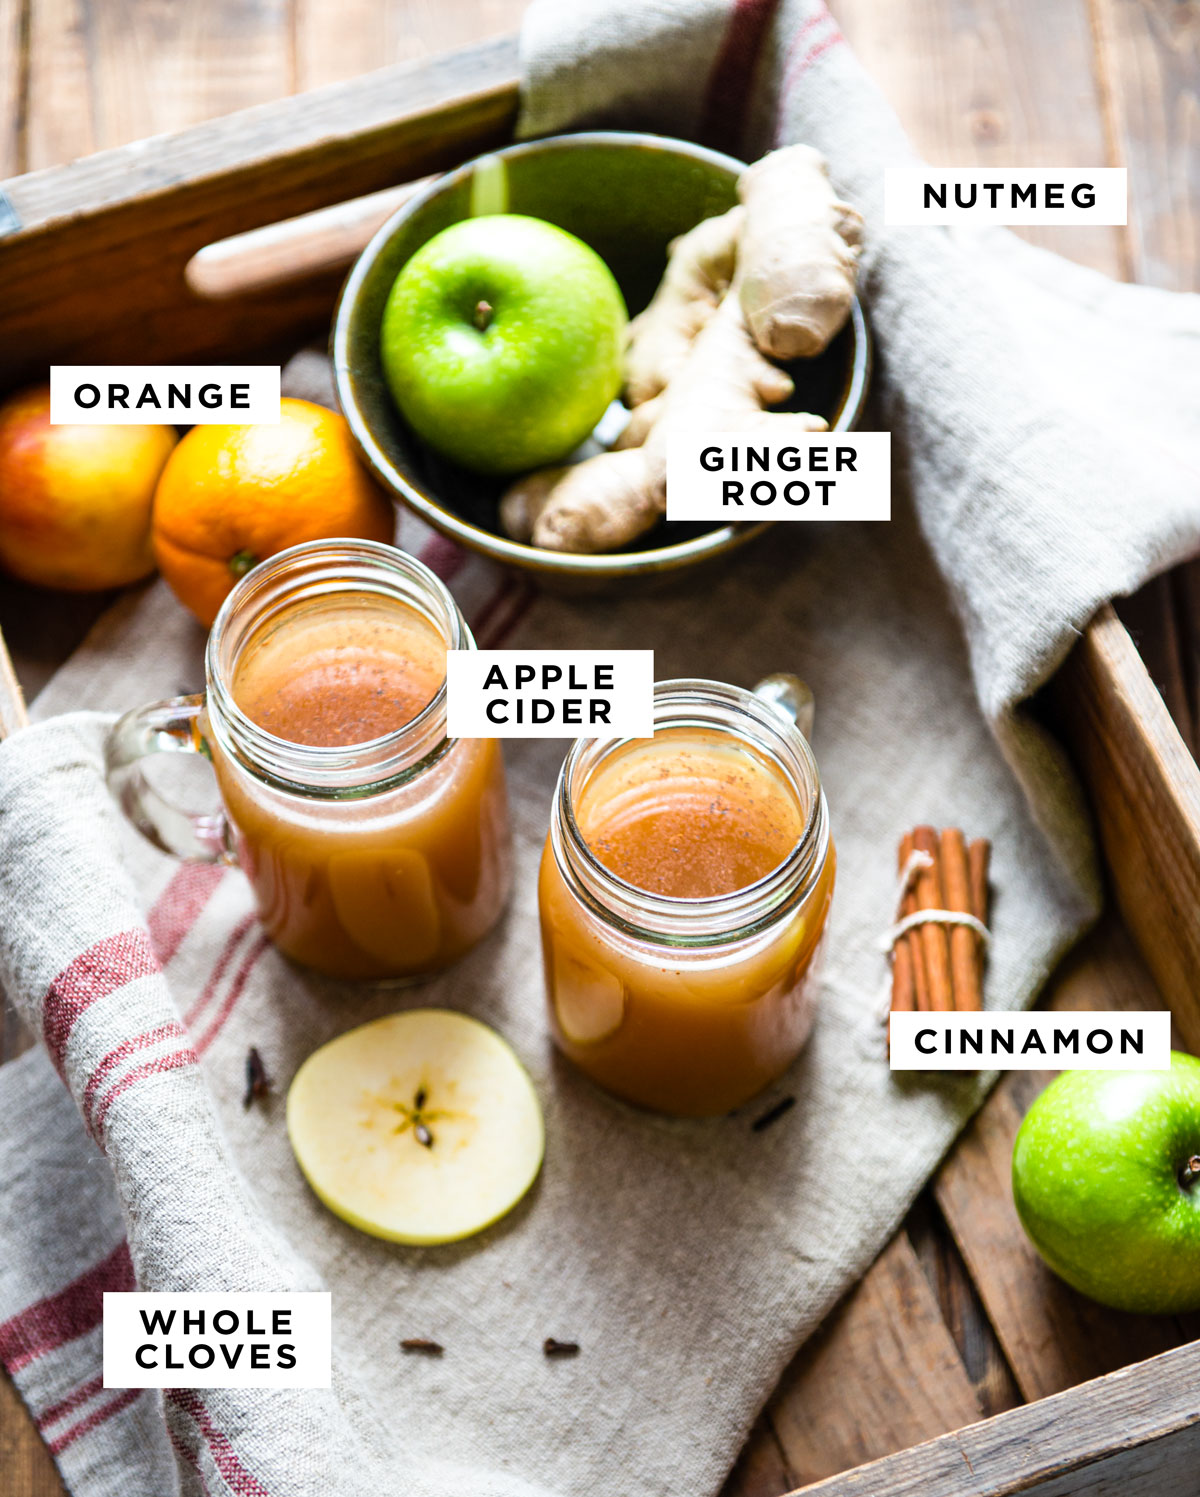 labeled ingredients for cider including nutmeg, ginger root, orange, apple cider, cinnamon and whole cloves.